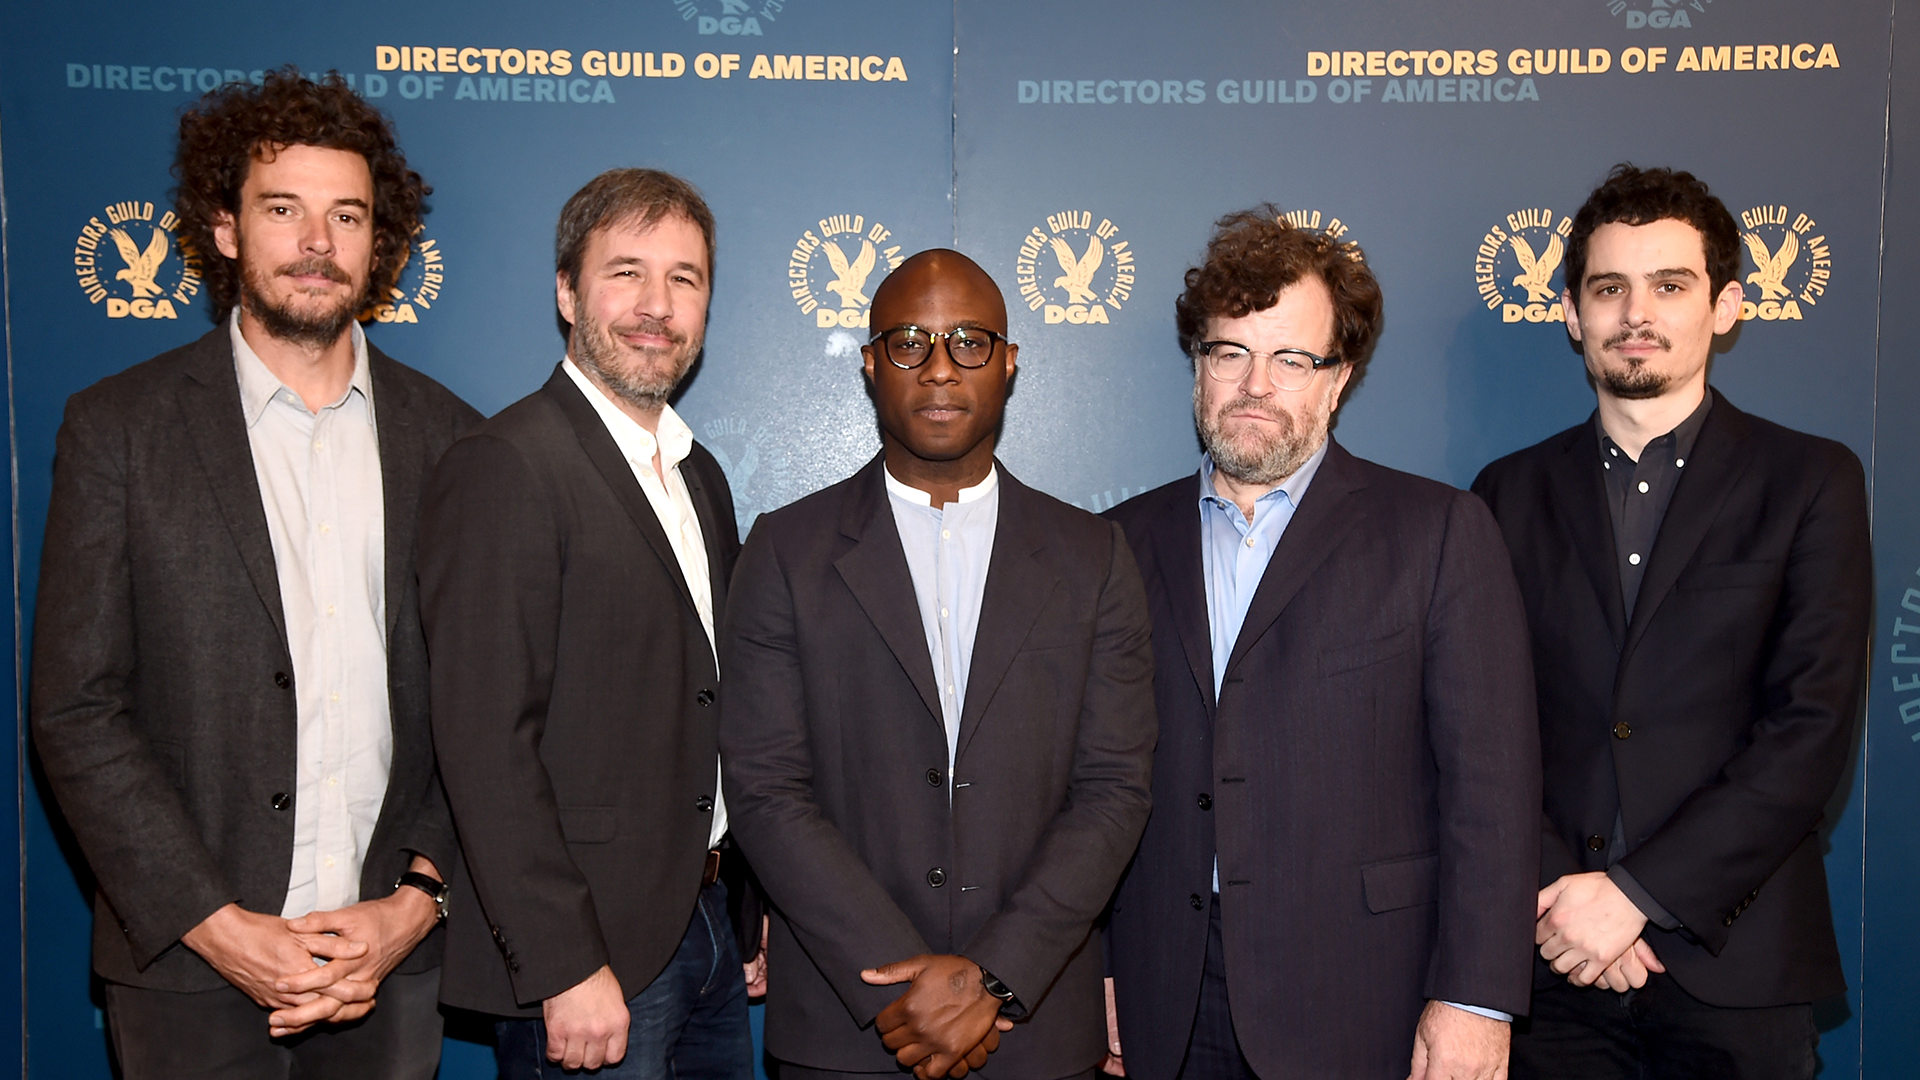 Directors Guild of America Awards